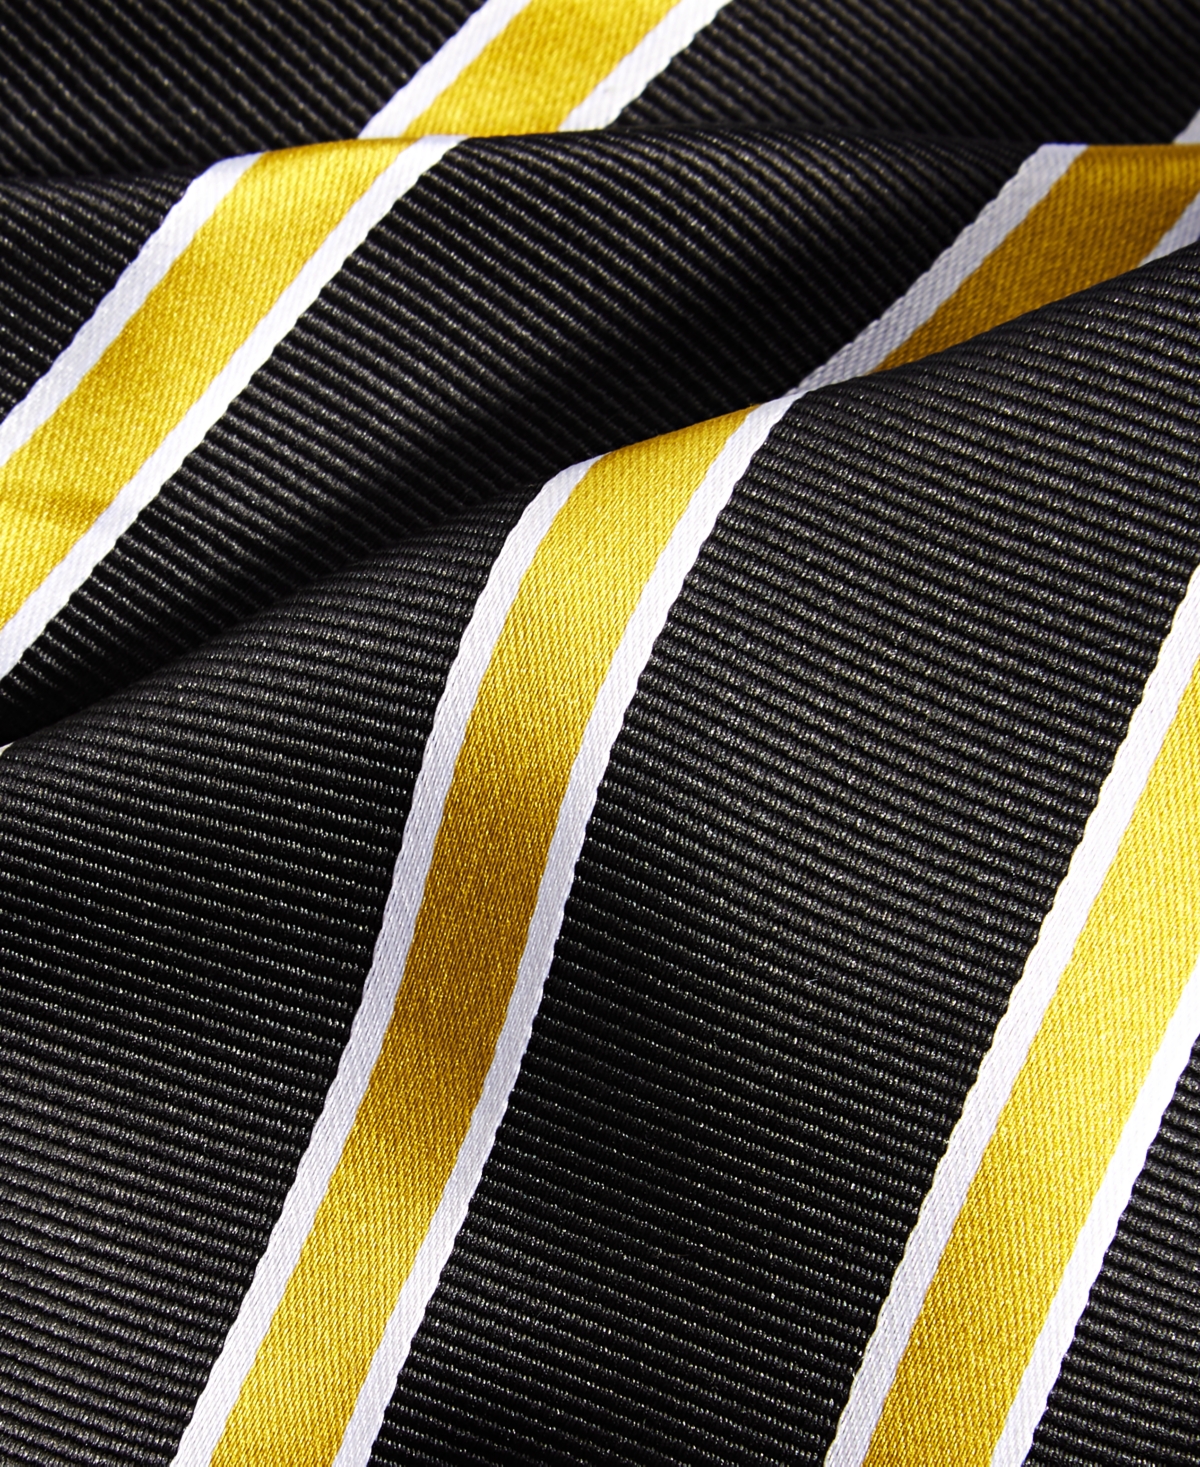 Shop Tayion Collection Men's Black & Gold Stripe Tie